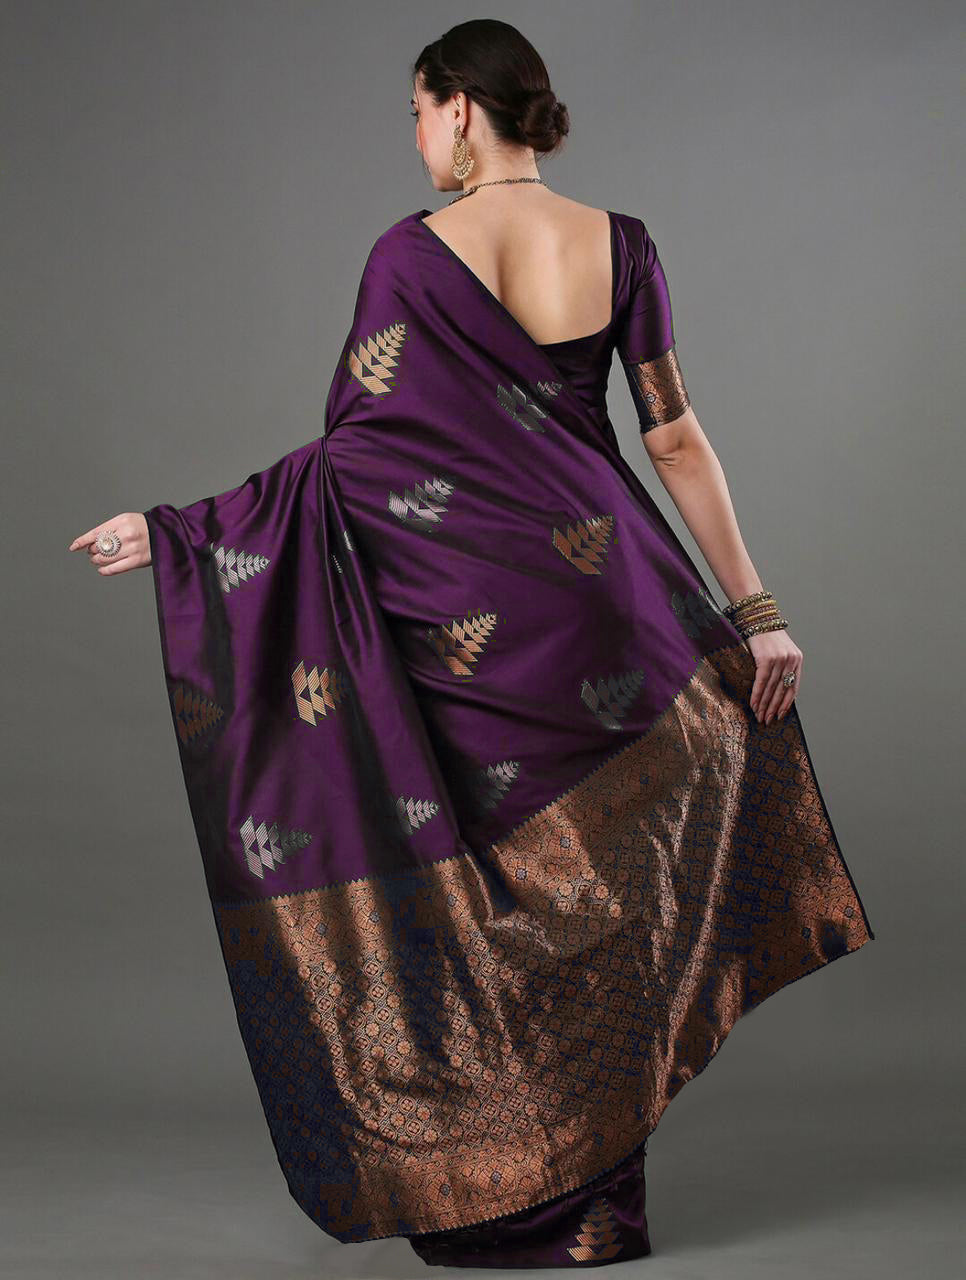 Dazzling Purple Soft Silk Saree With Wonderful Blouse Piece - Colorful Saree